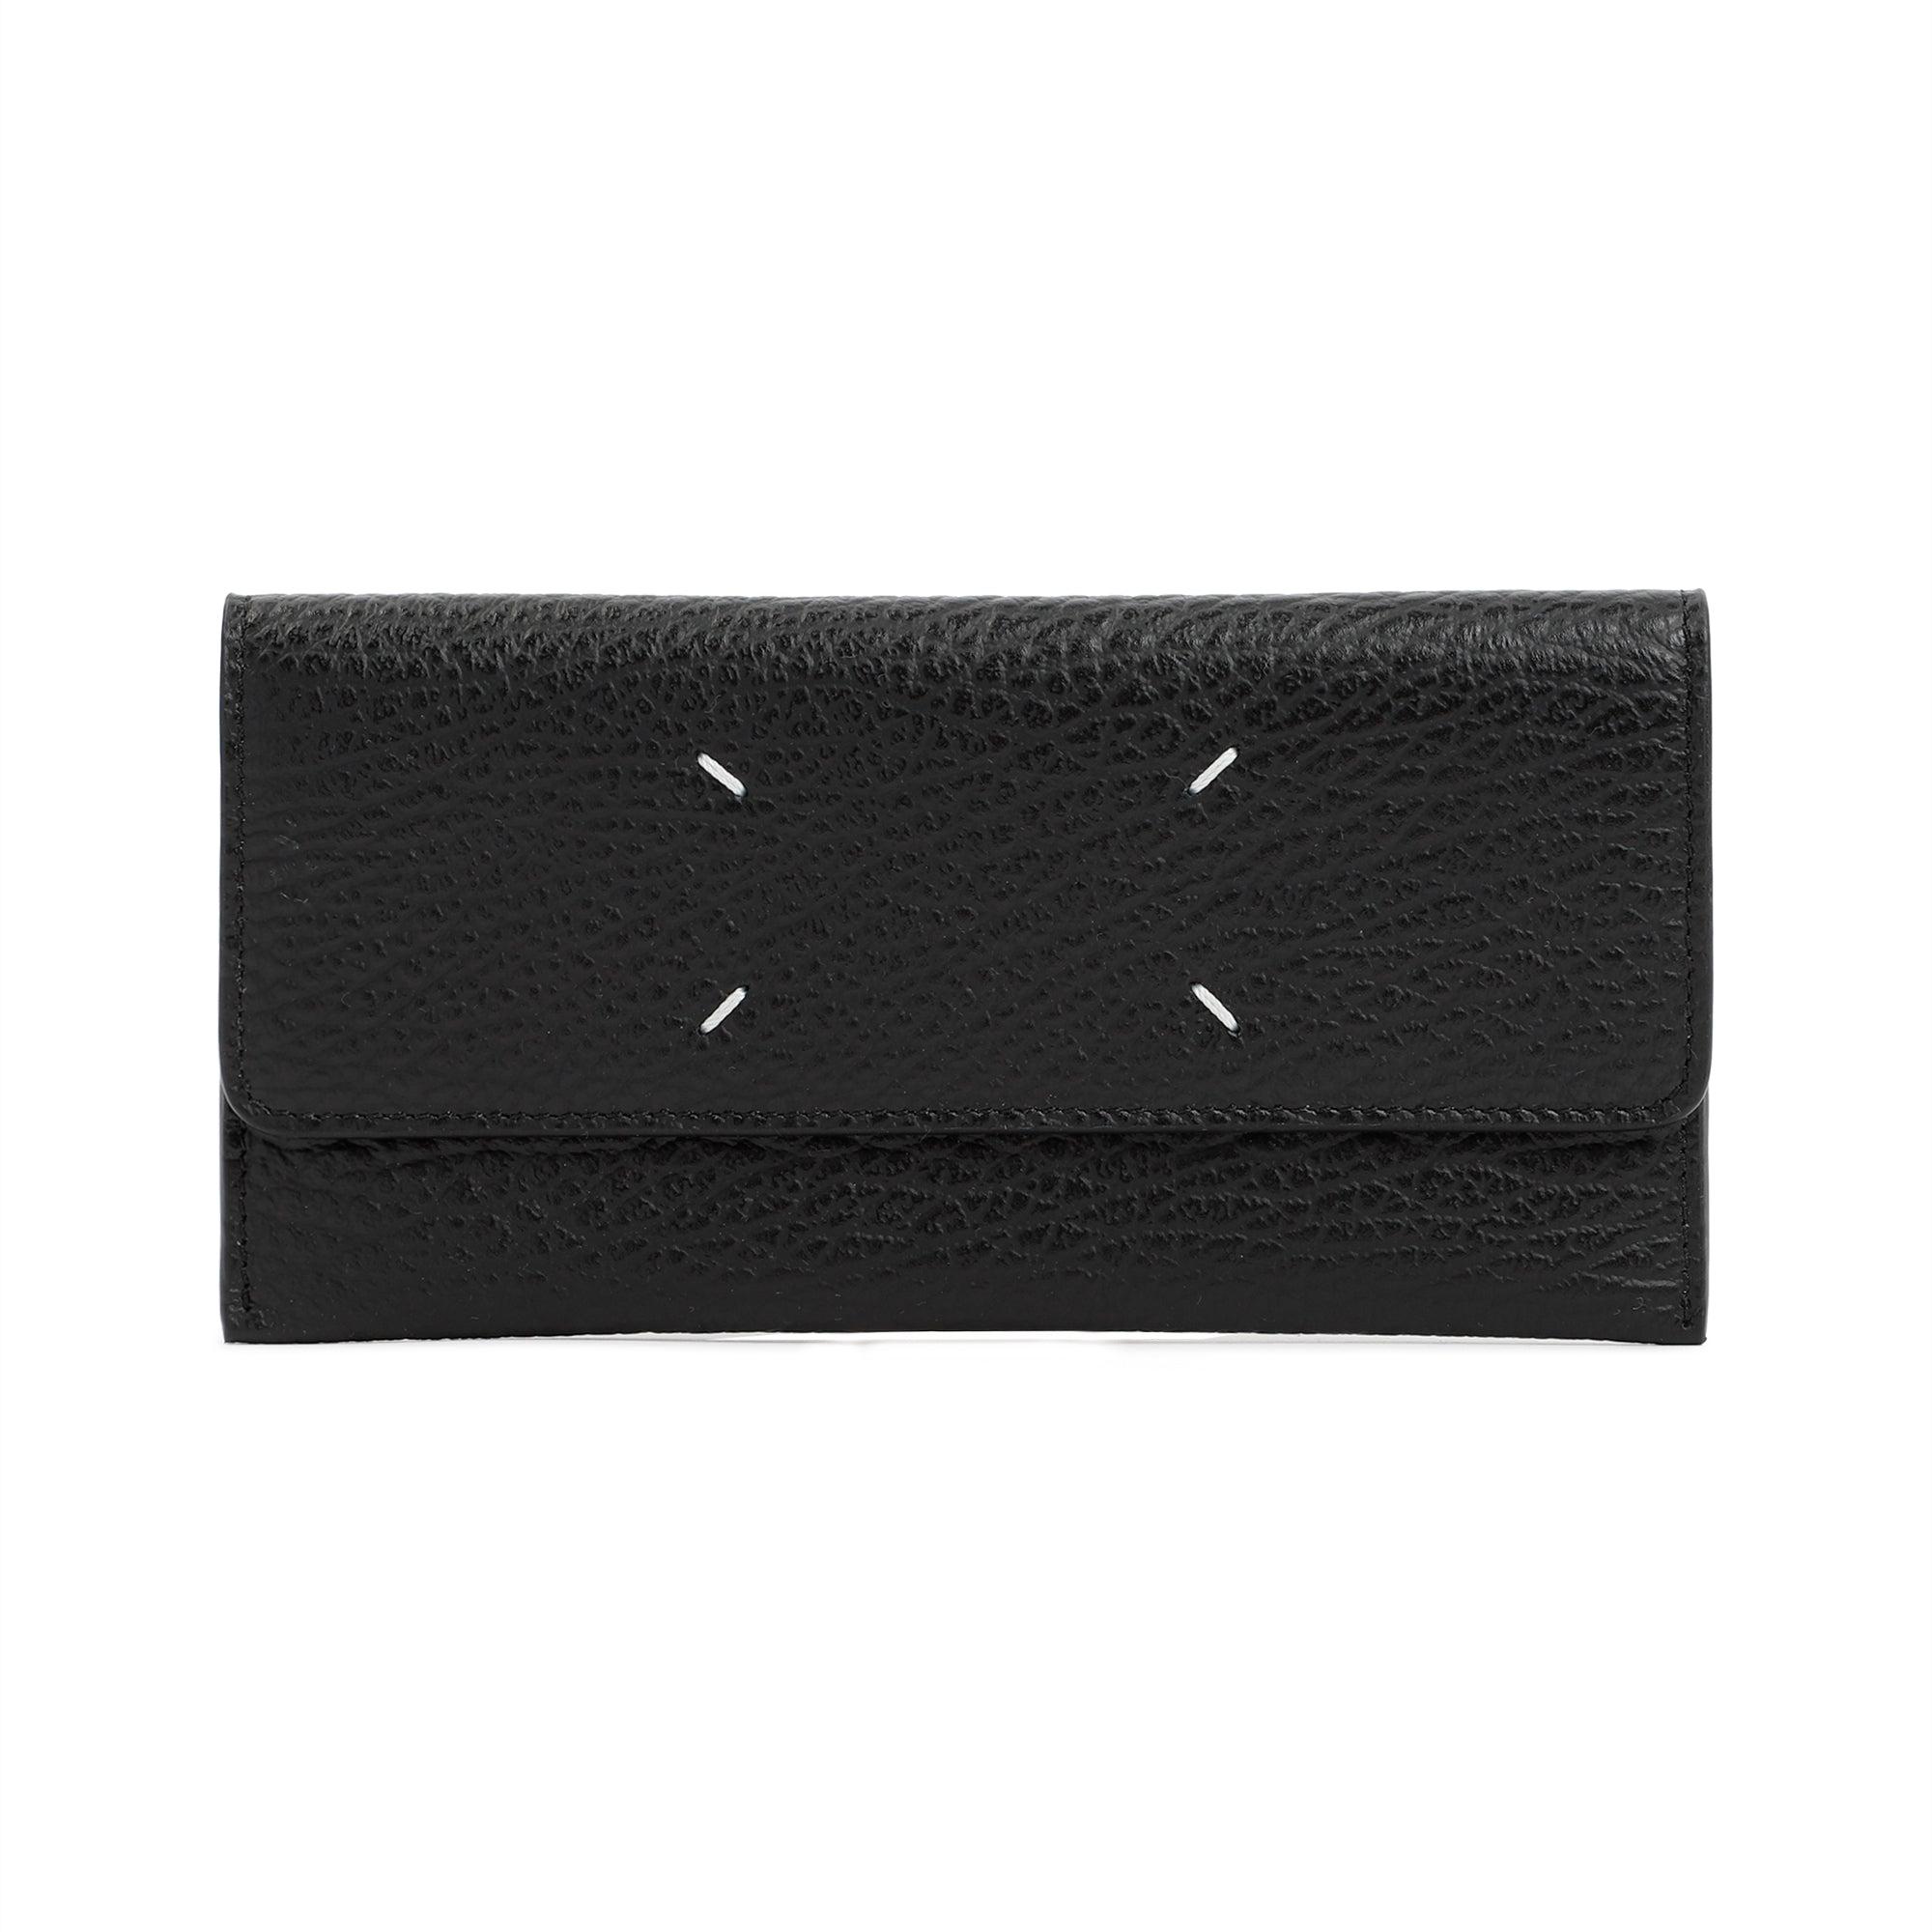 Maison Margiela Large Leather Wallet in Black | Lyst